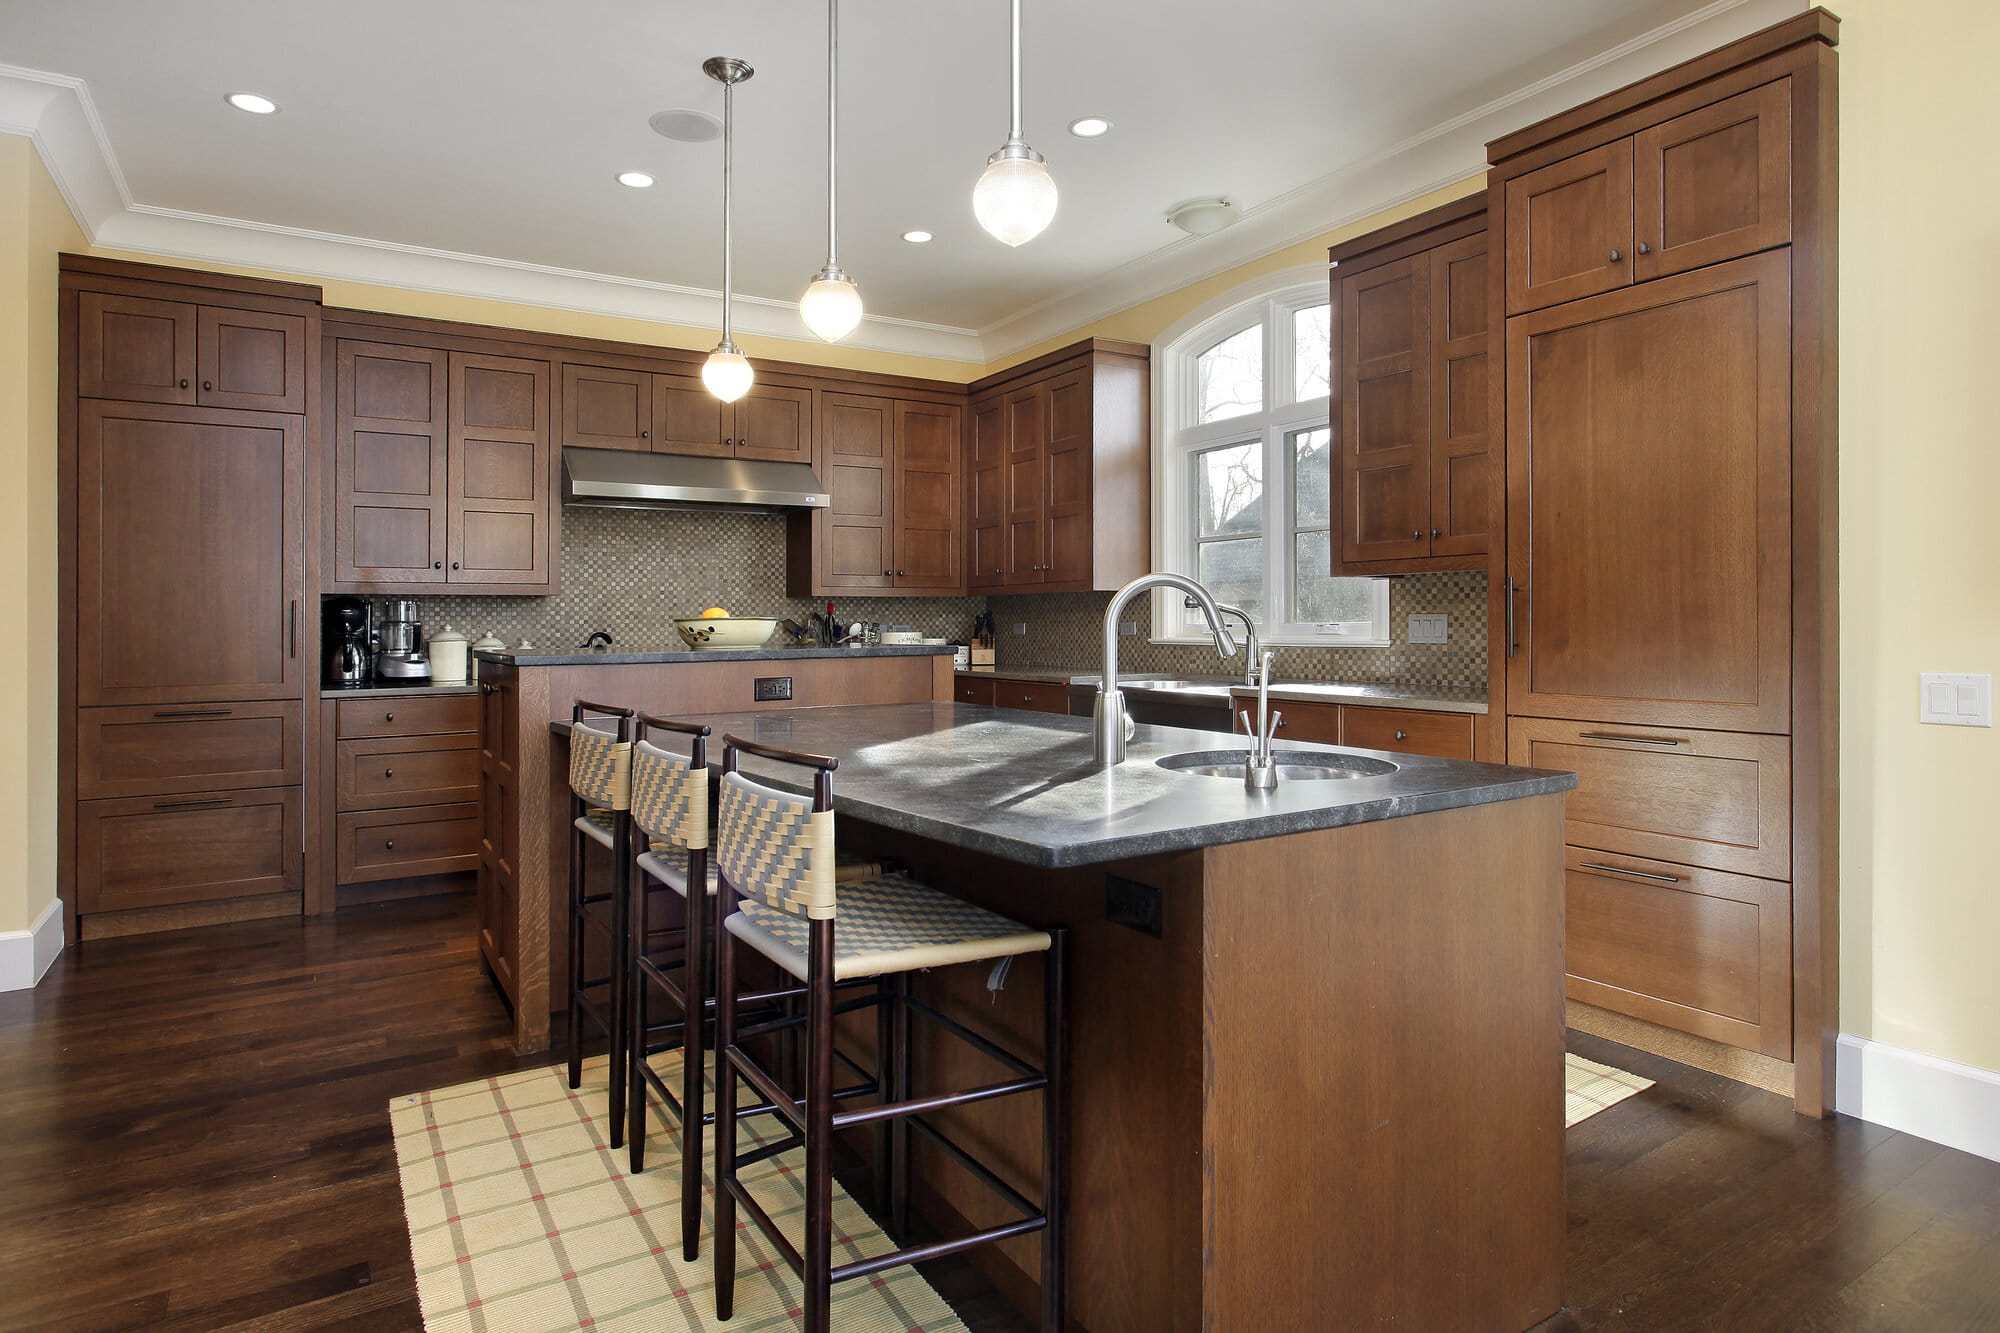  Choose a warm color floor for dark oak cabinets